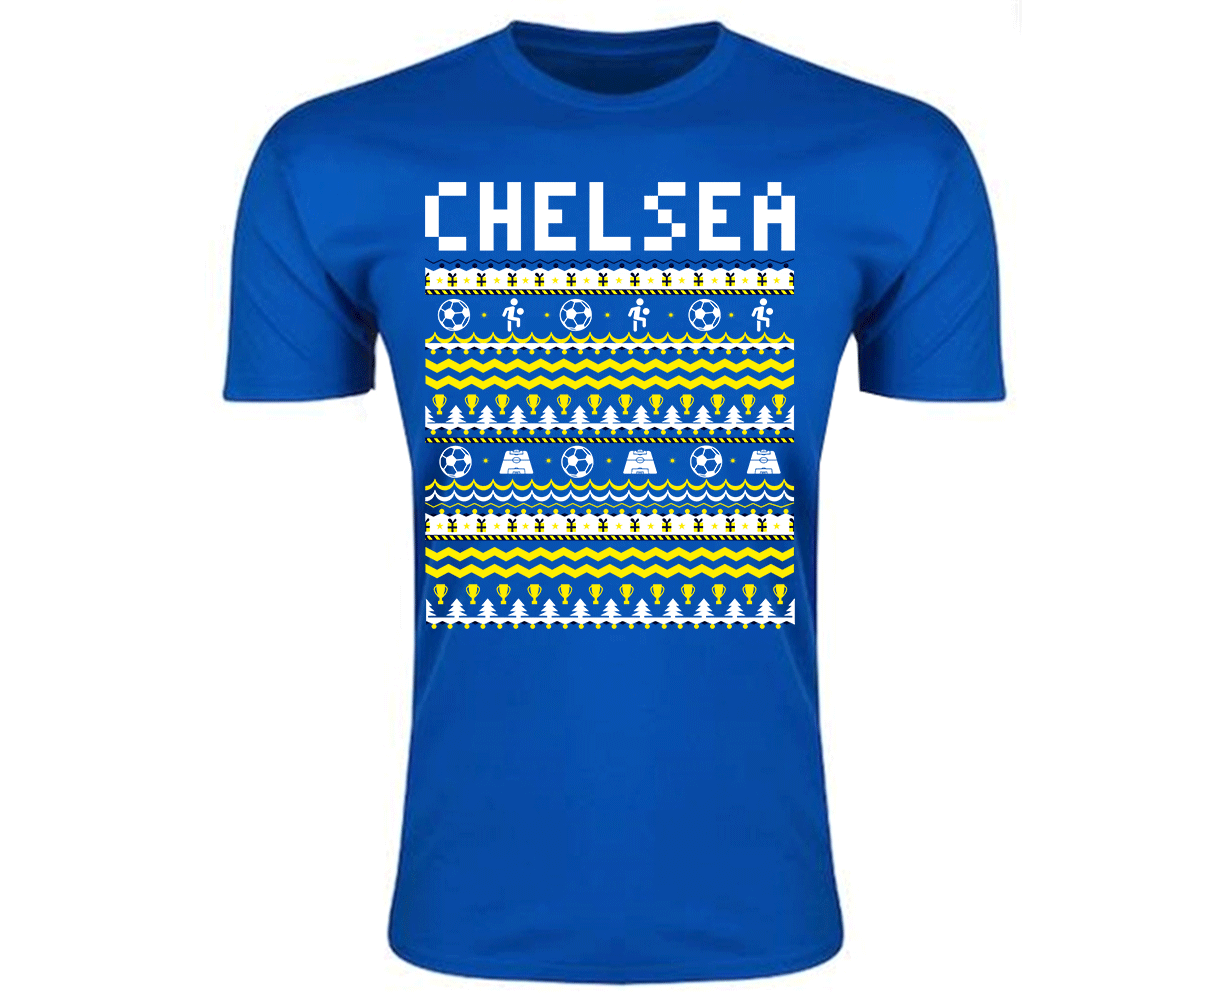 Chelsea Christmas T-Shirt (Blue)